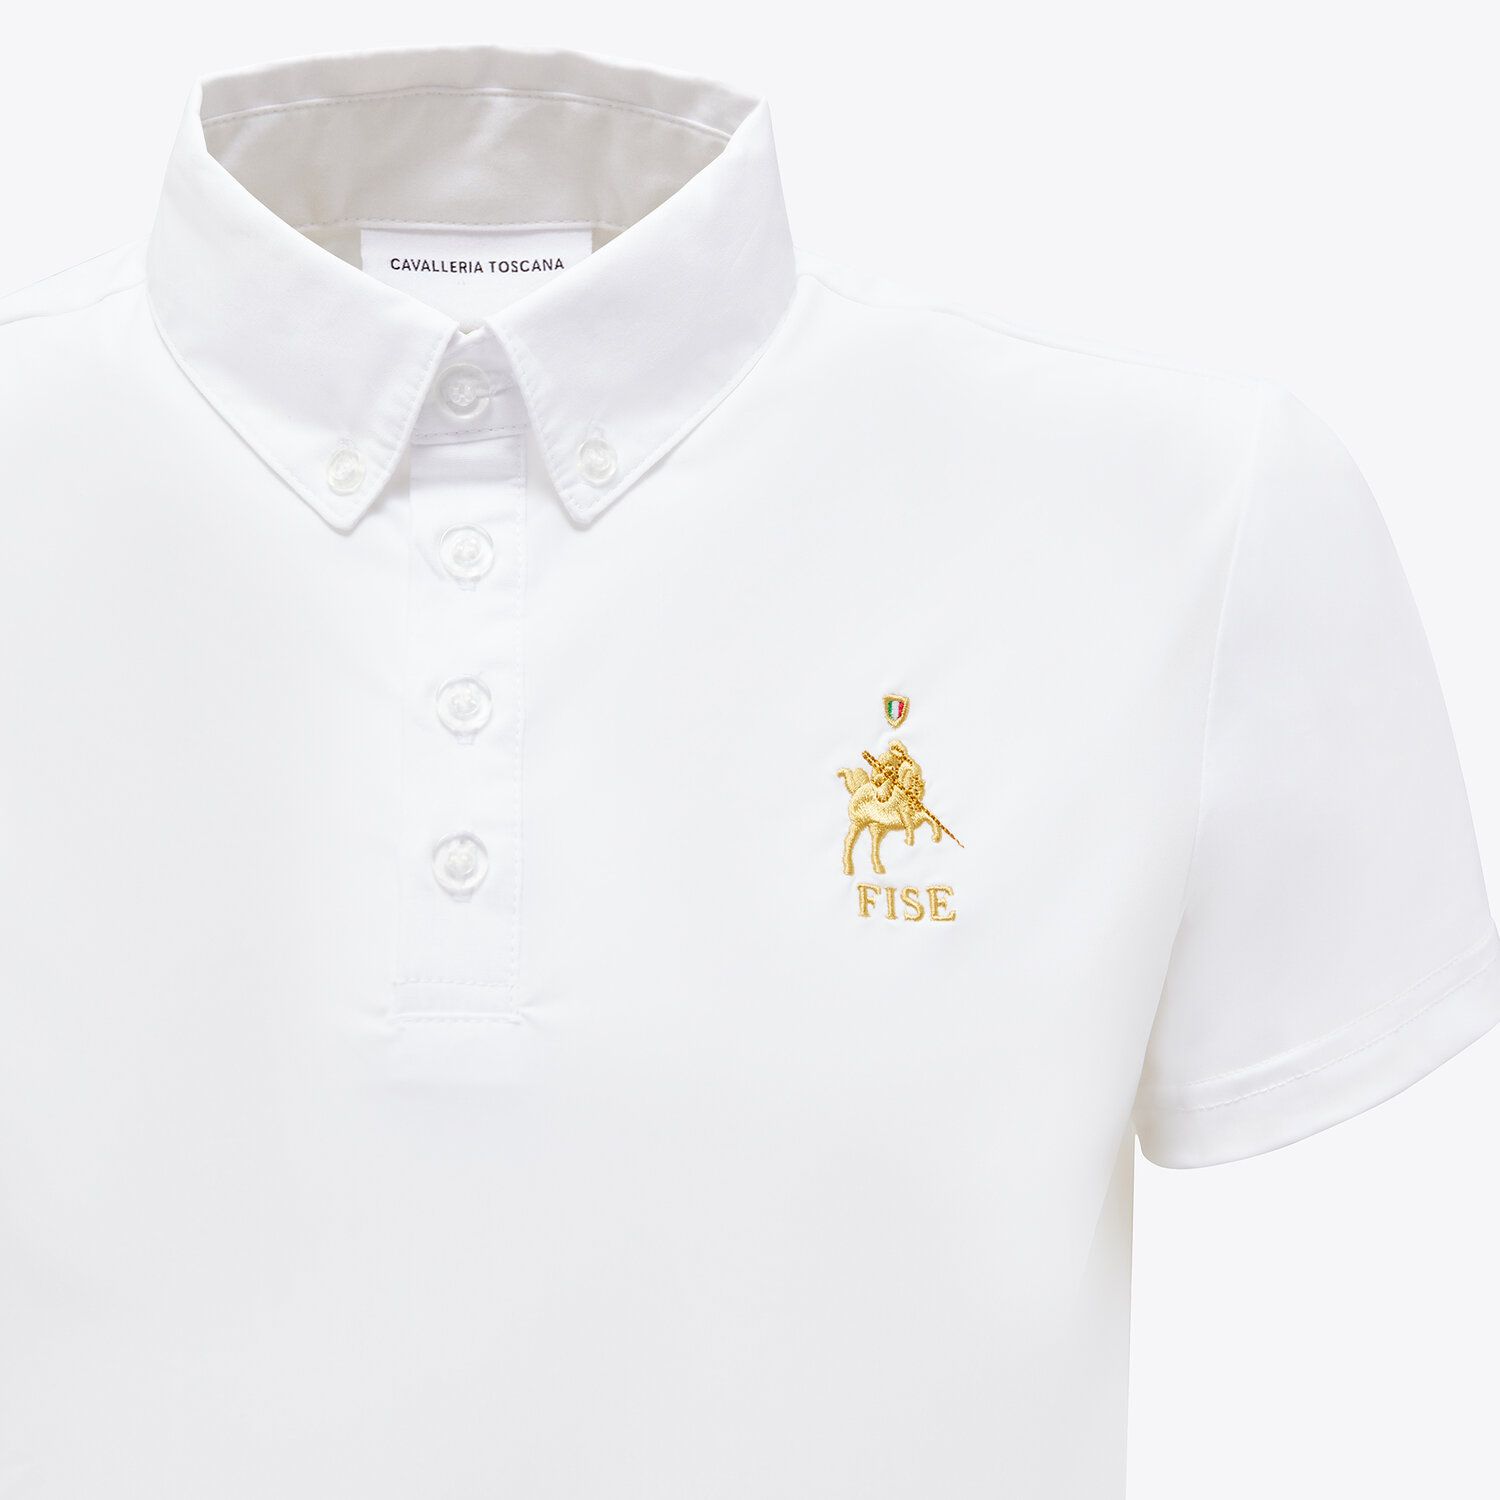 Cavalleria Toscana Boy's FISE polo shirt WHITE-3